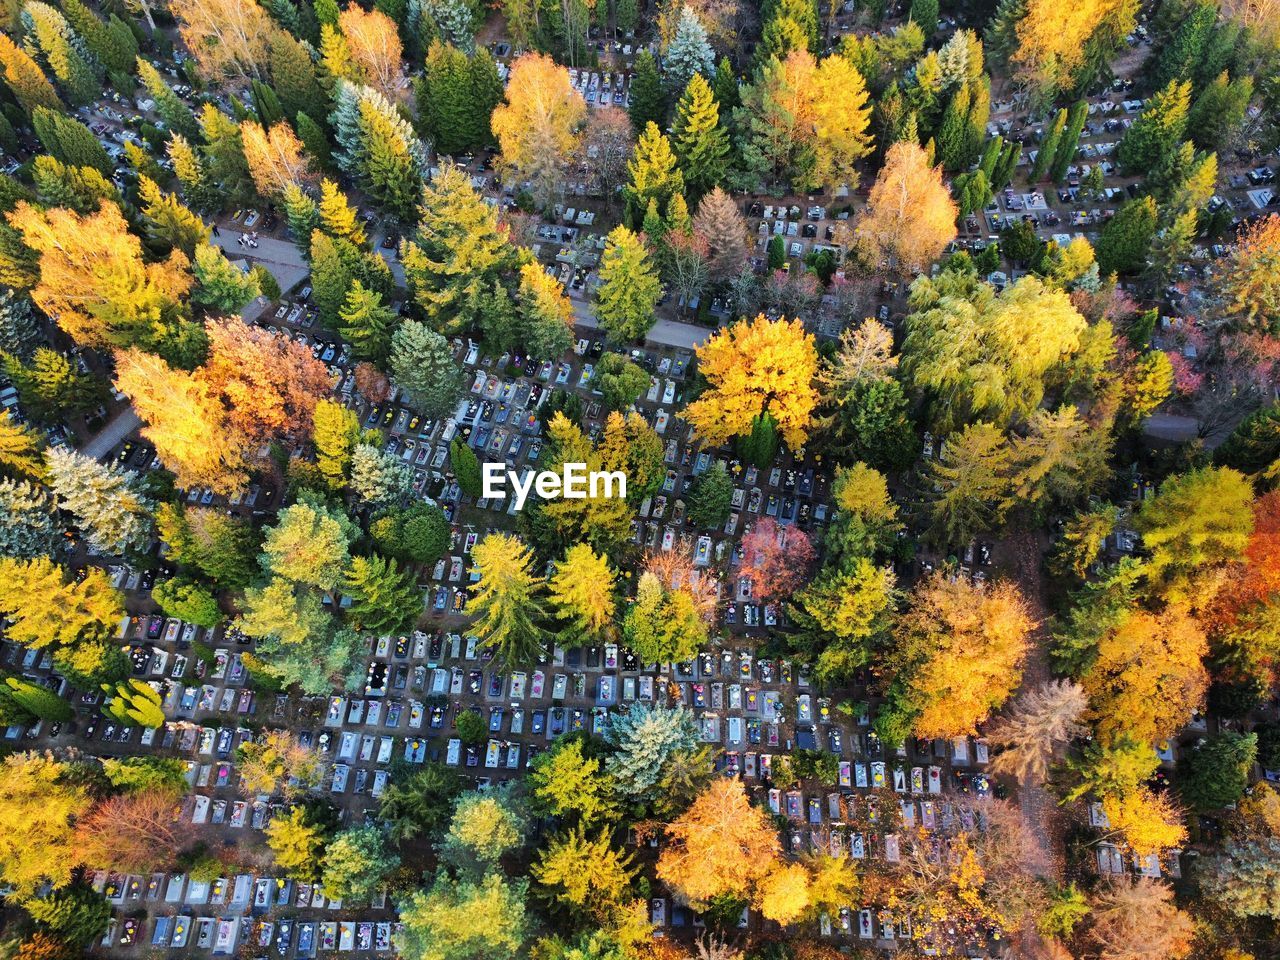 Cemetery in autumn - drone shot